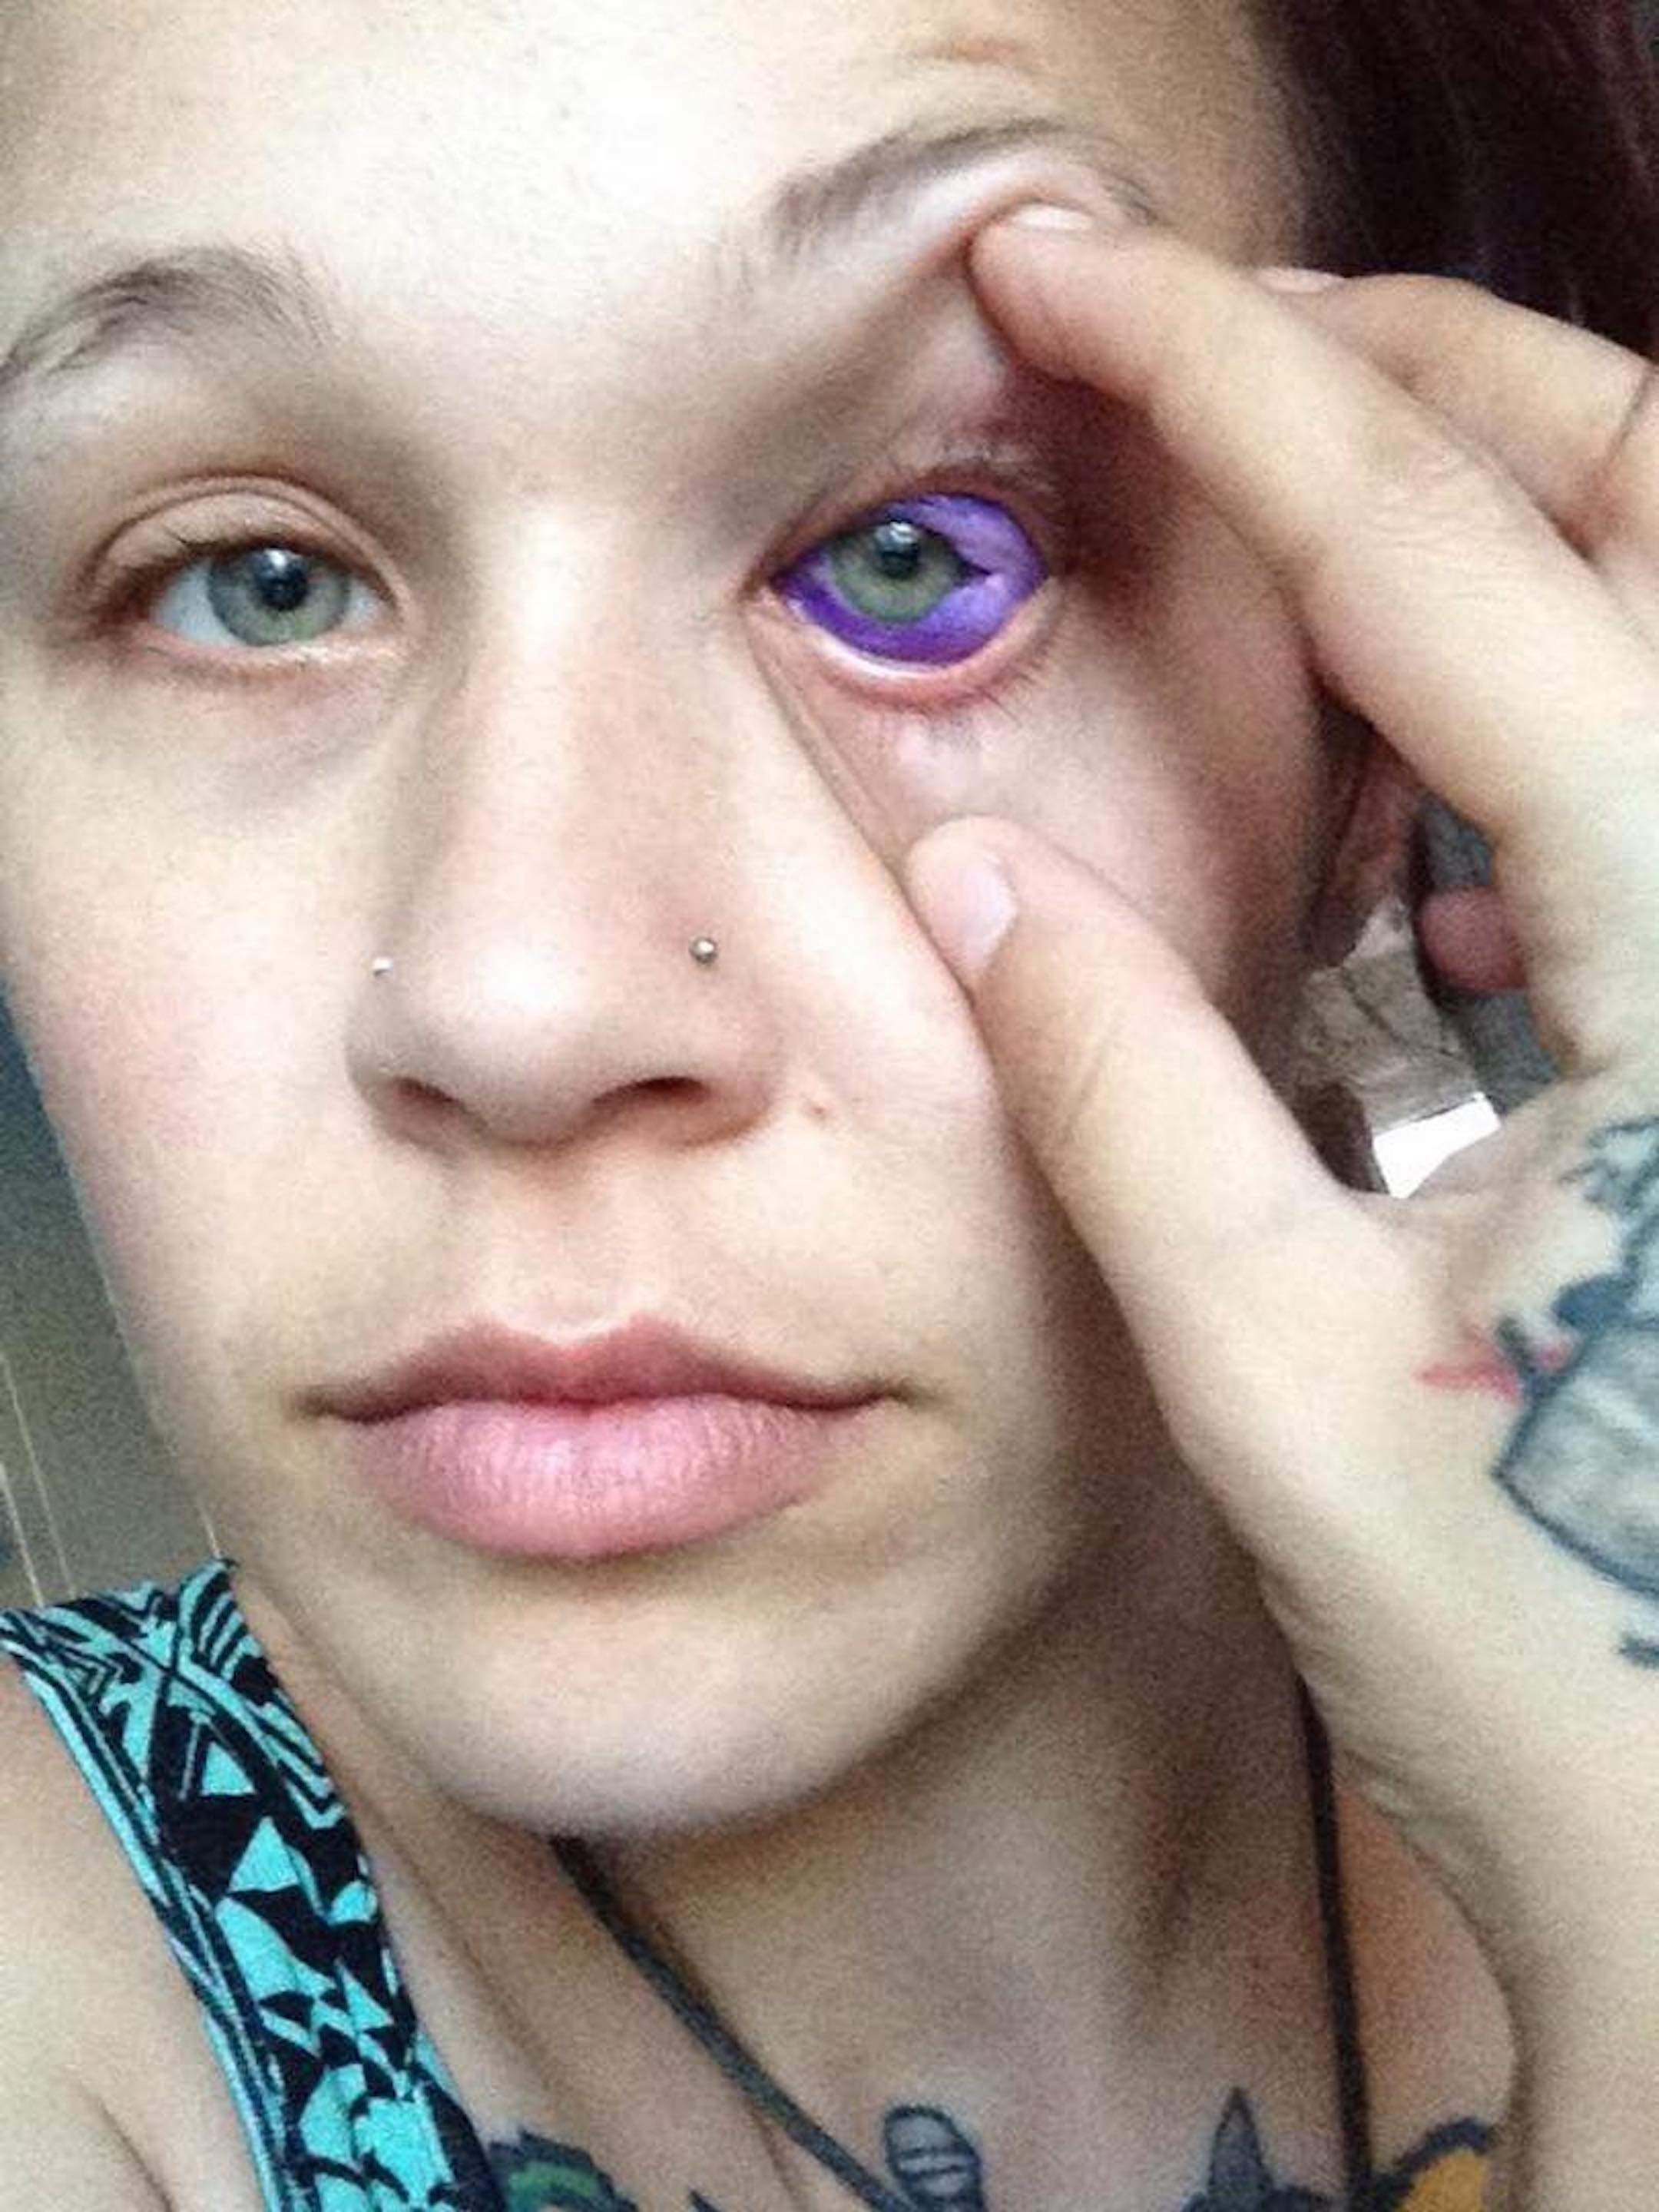 tattooed eyeballs